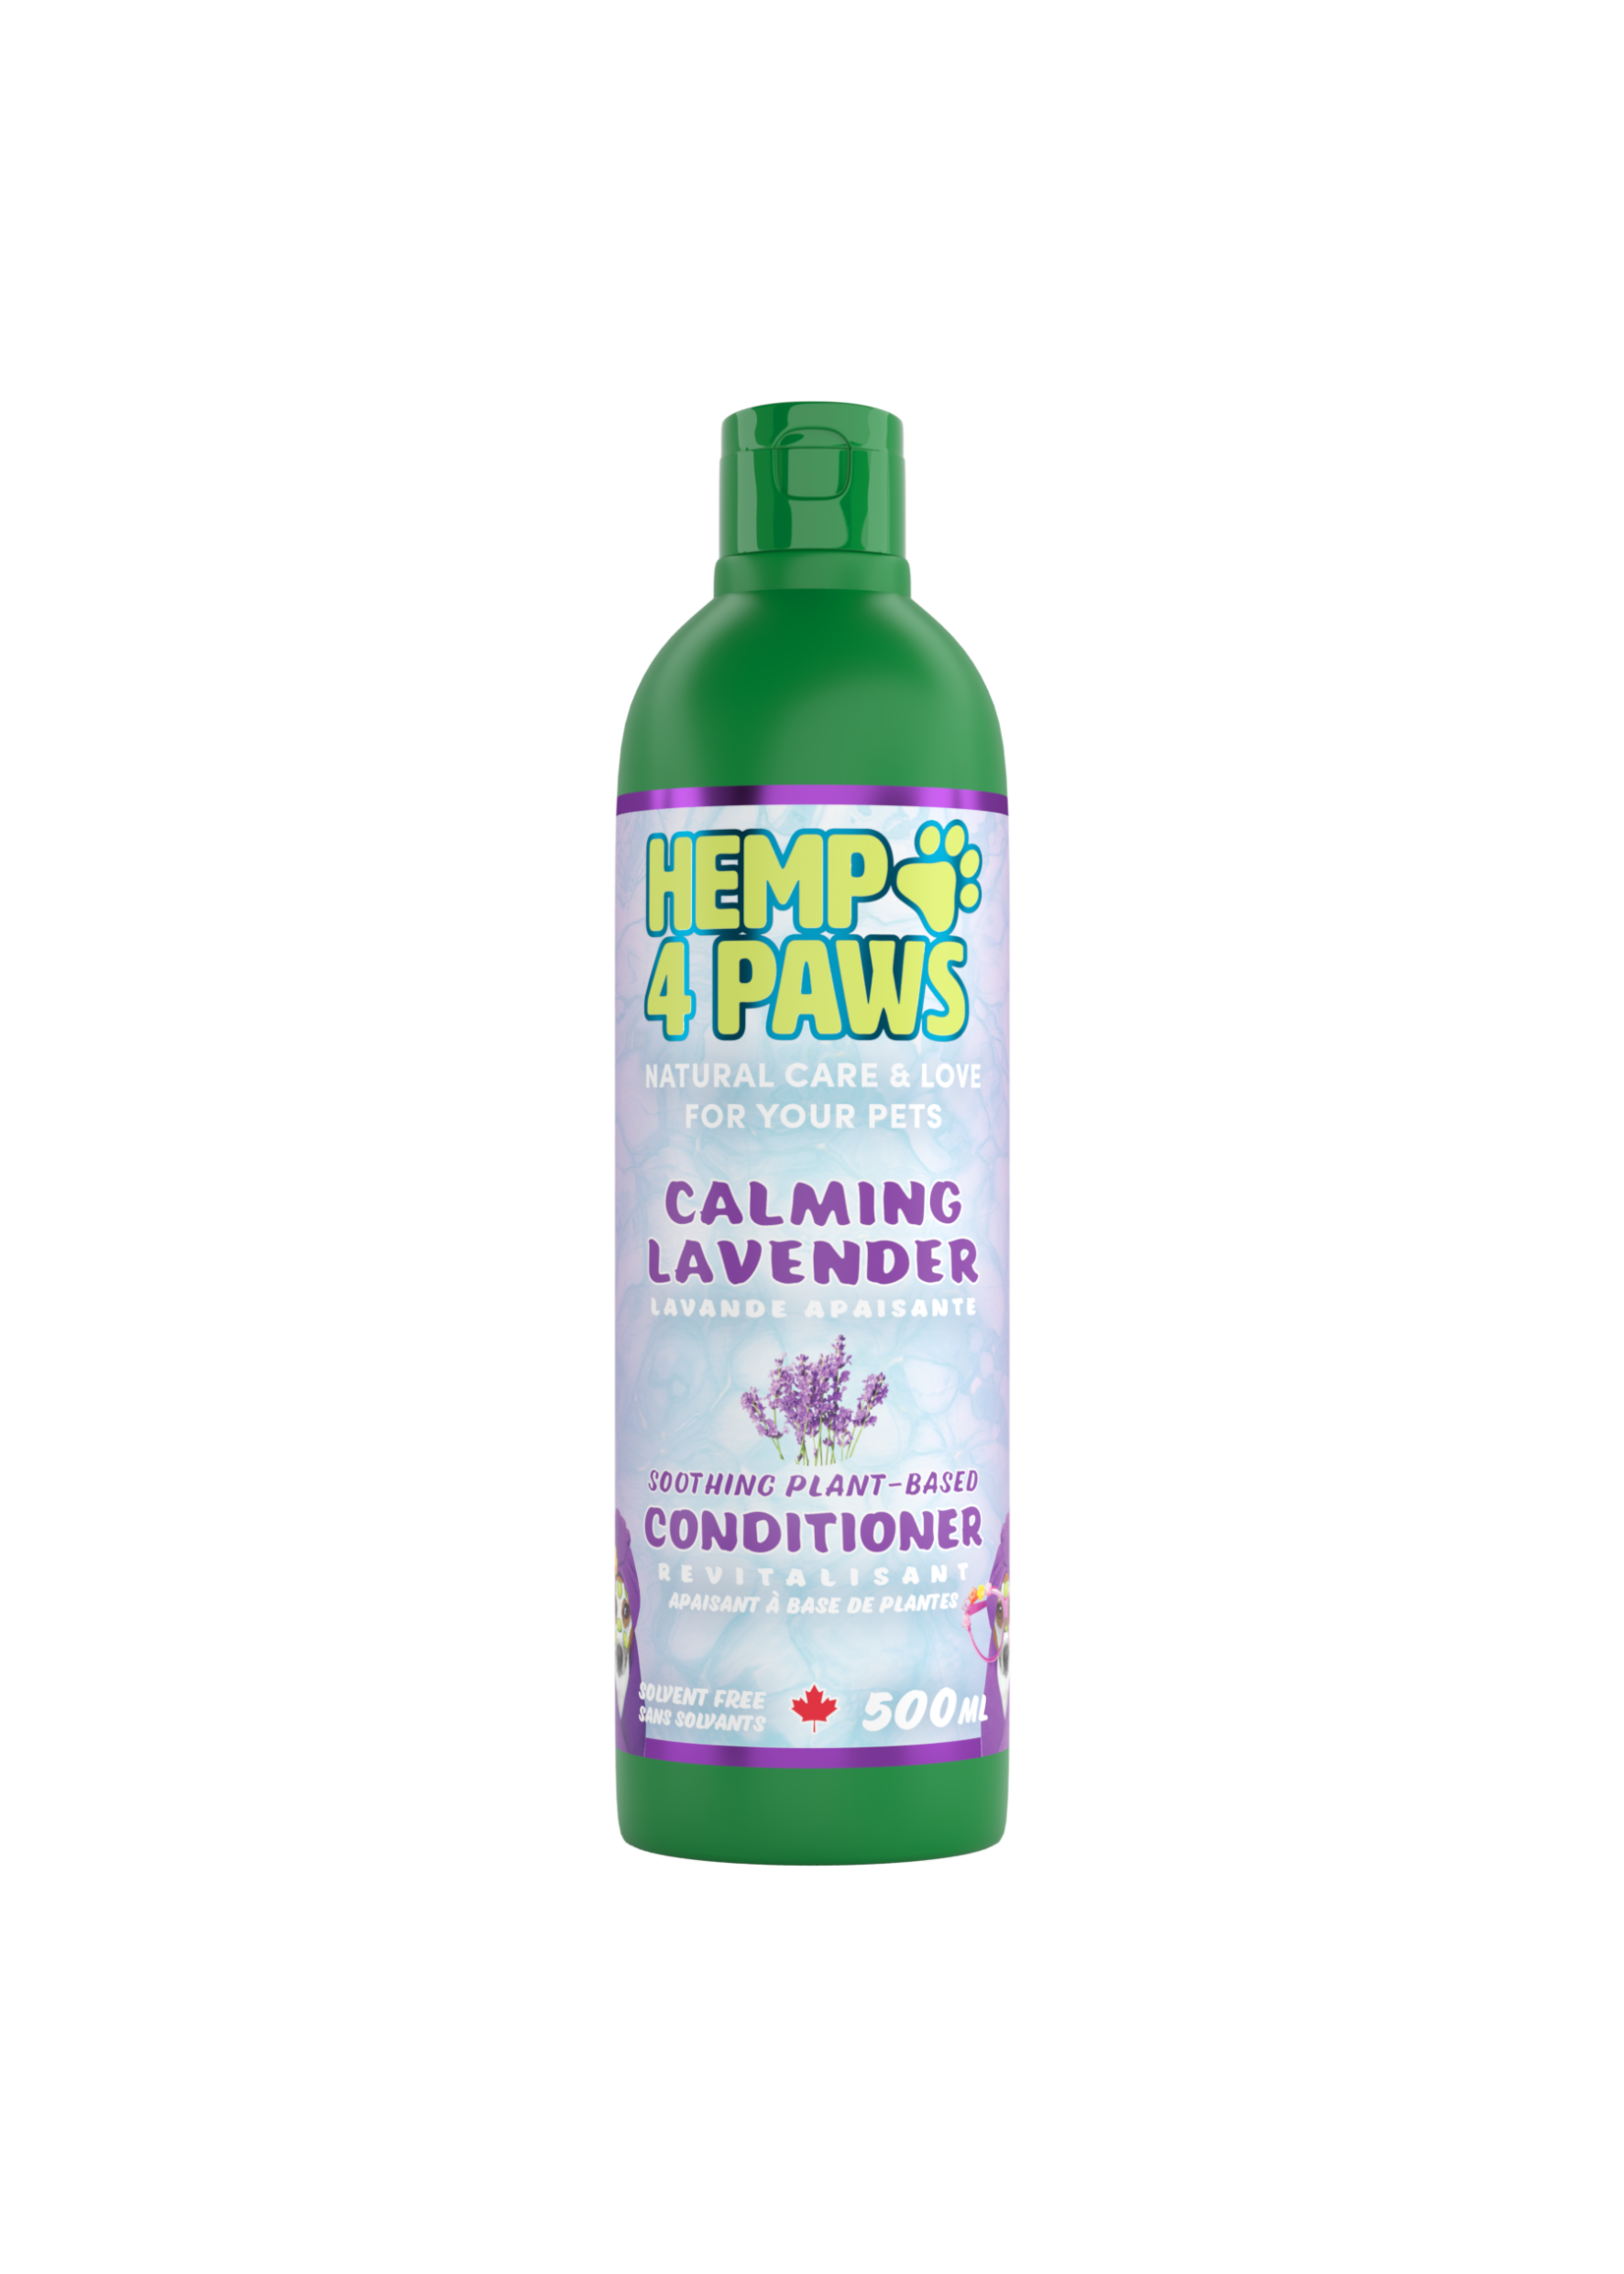 Hemp 4 Paws Hemp 4 Paws Conditioner Calming Lavender 500ml